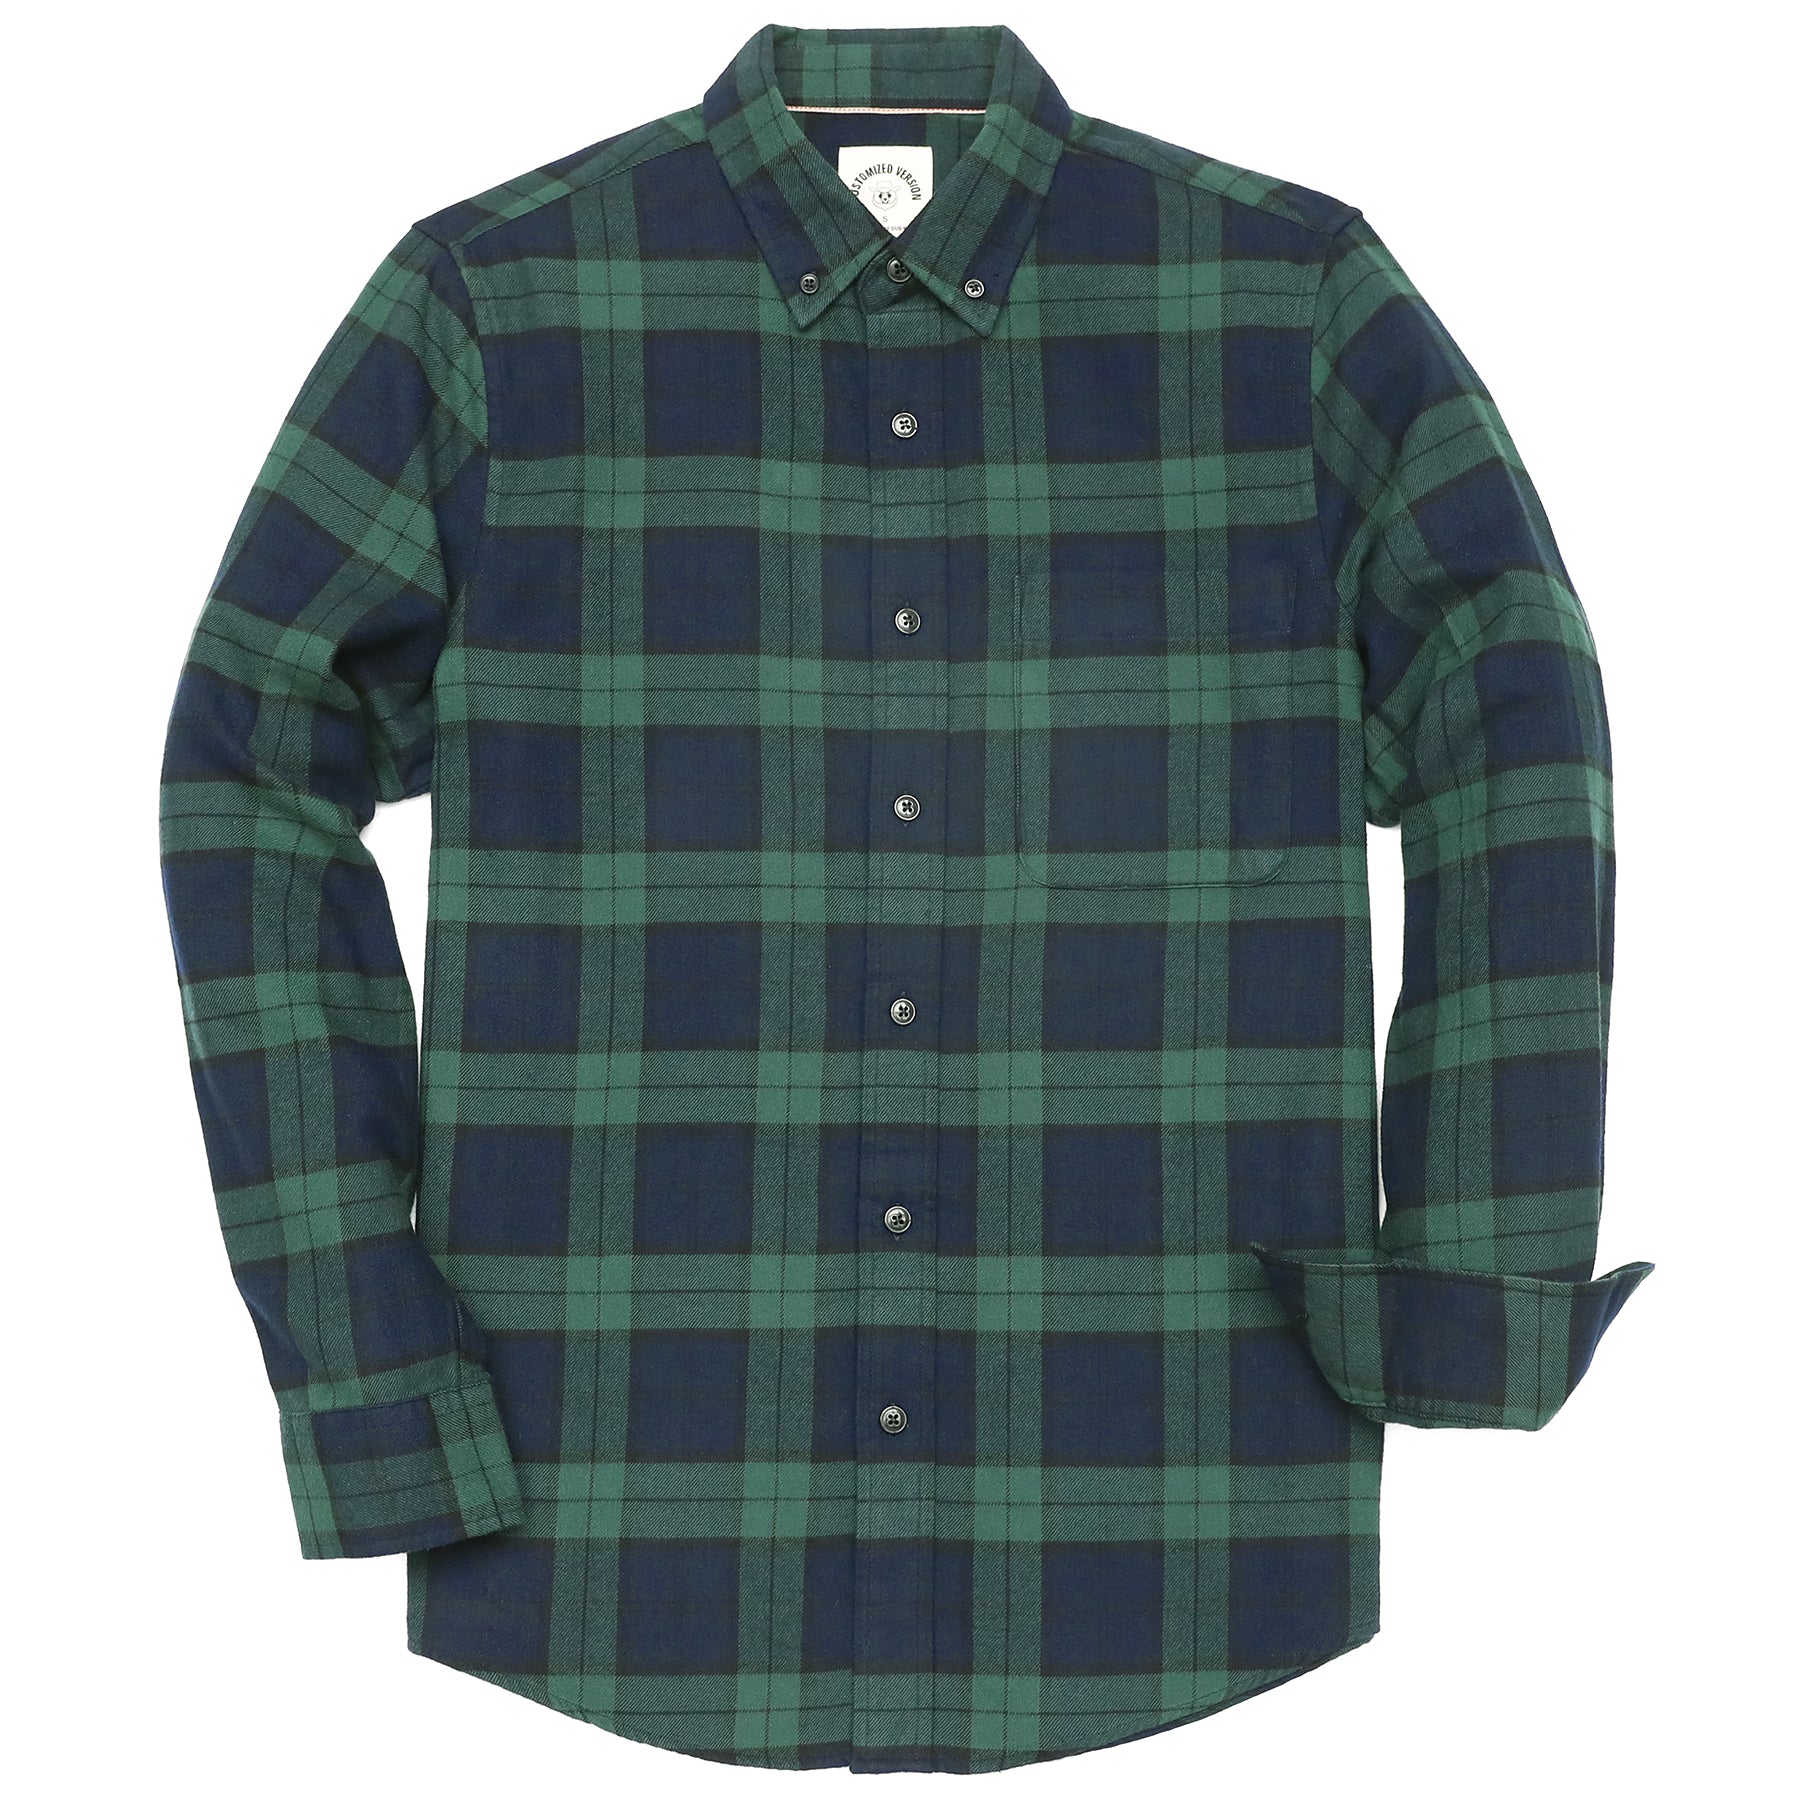 Men's Plaid Flannel Long Sleeve Shirts#0336